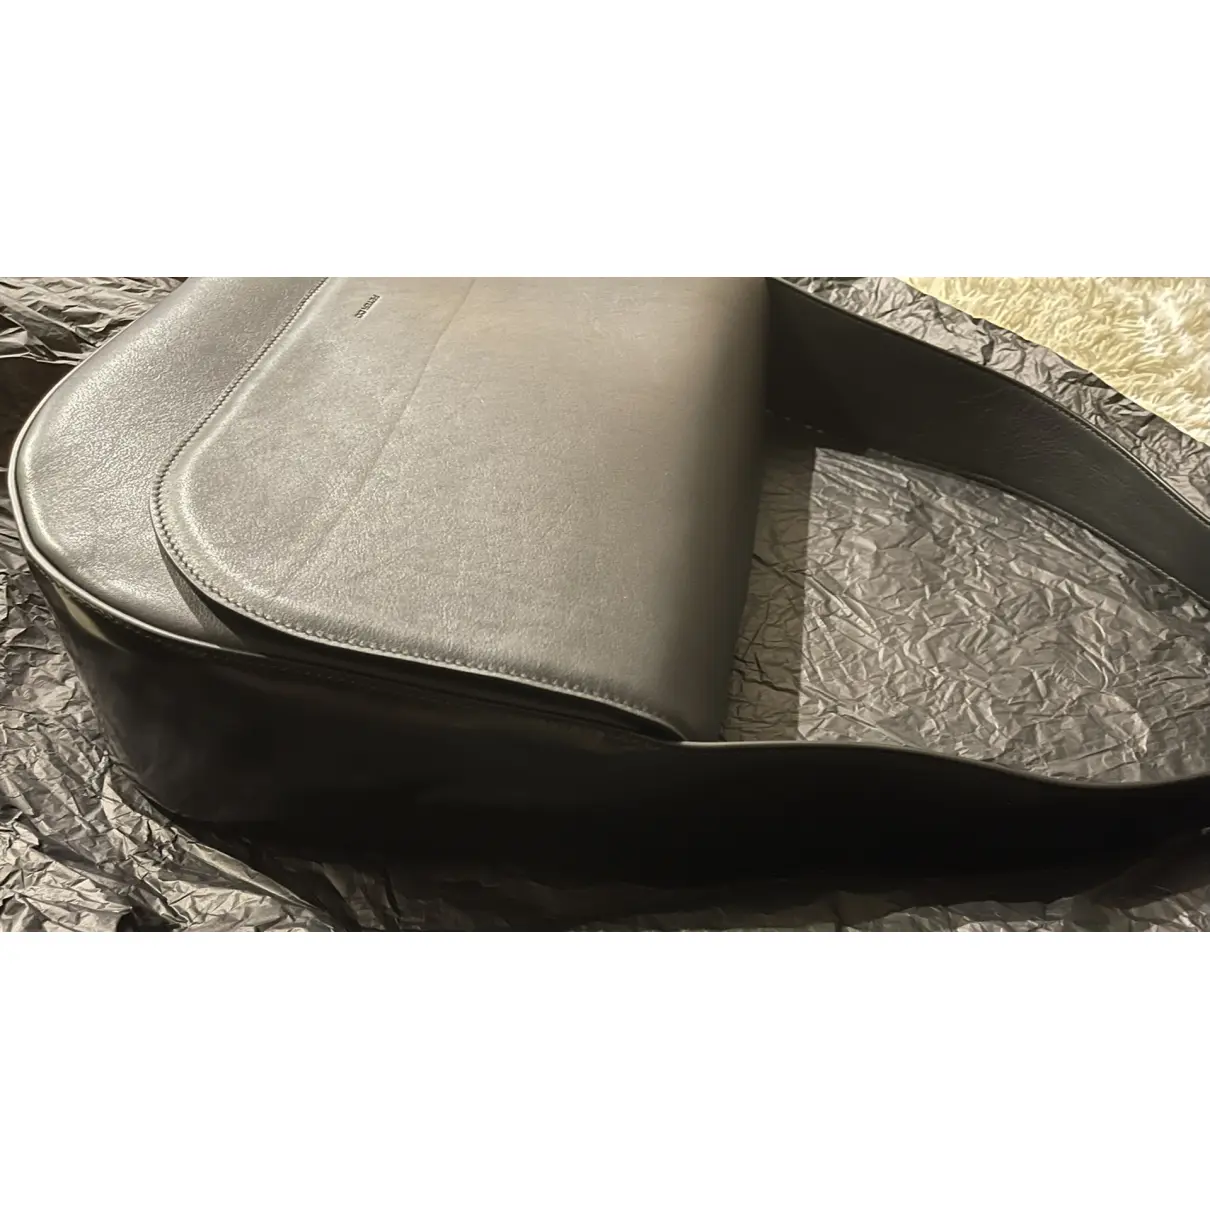 Buy Peter Do Leather handbag online